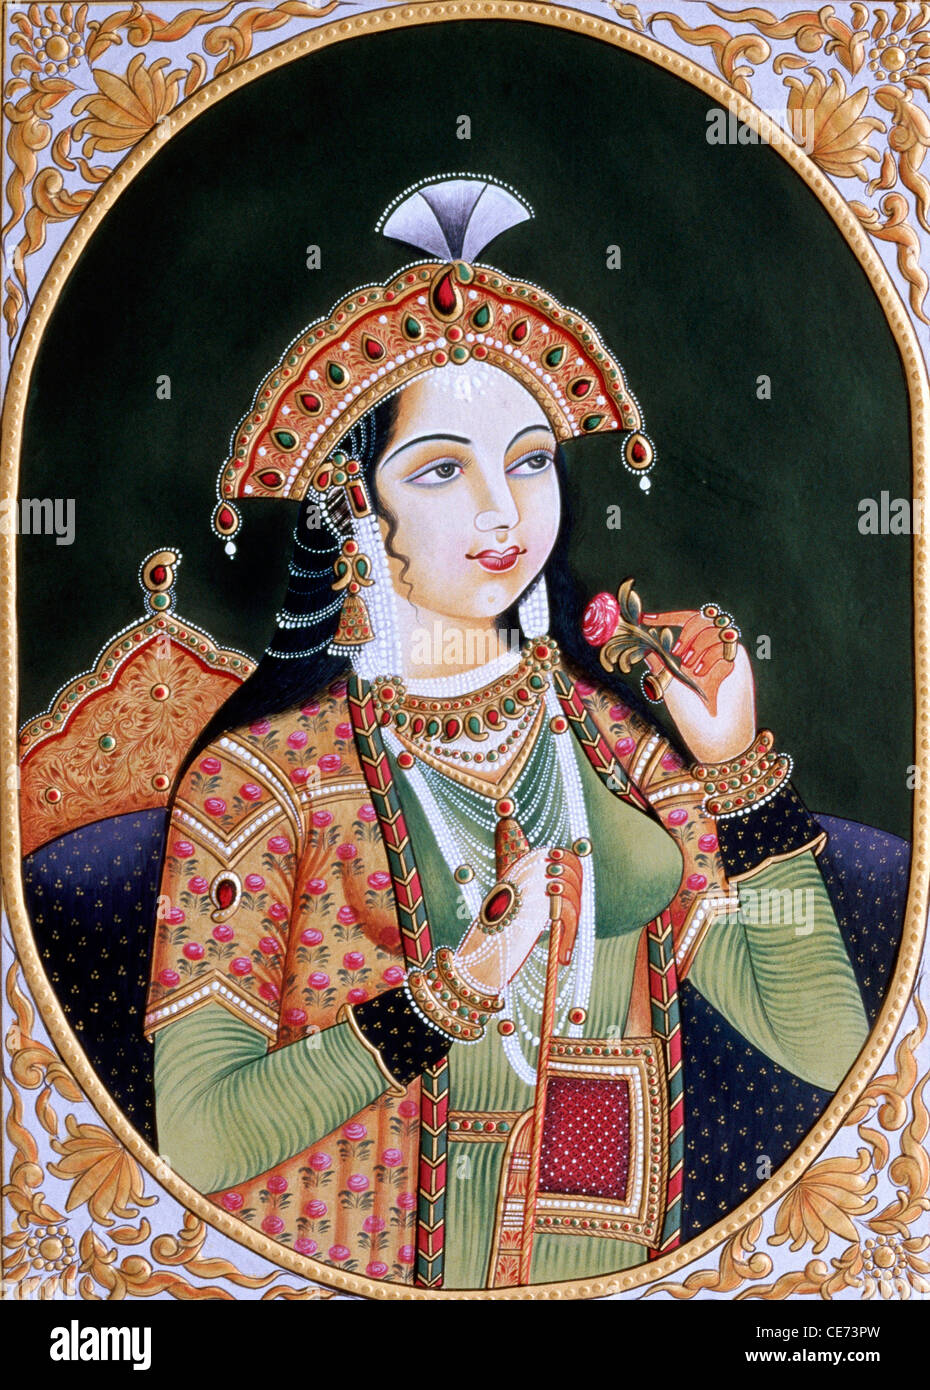 Pittura in miniatura su carta della principessa Mumtaz Mahal moglie dell'imperatore Mughal Shah Jahan Foto Stock